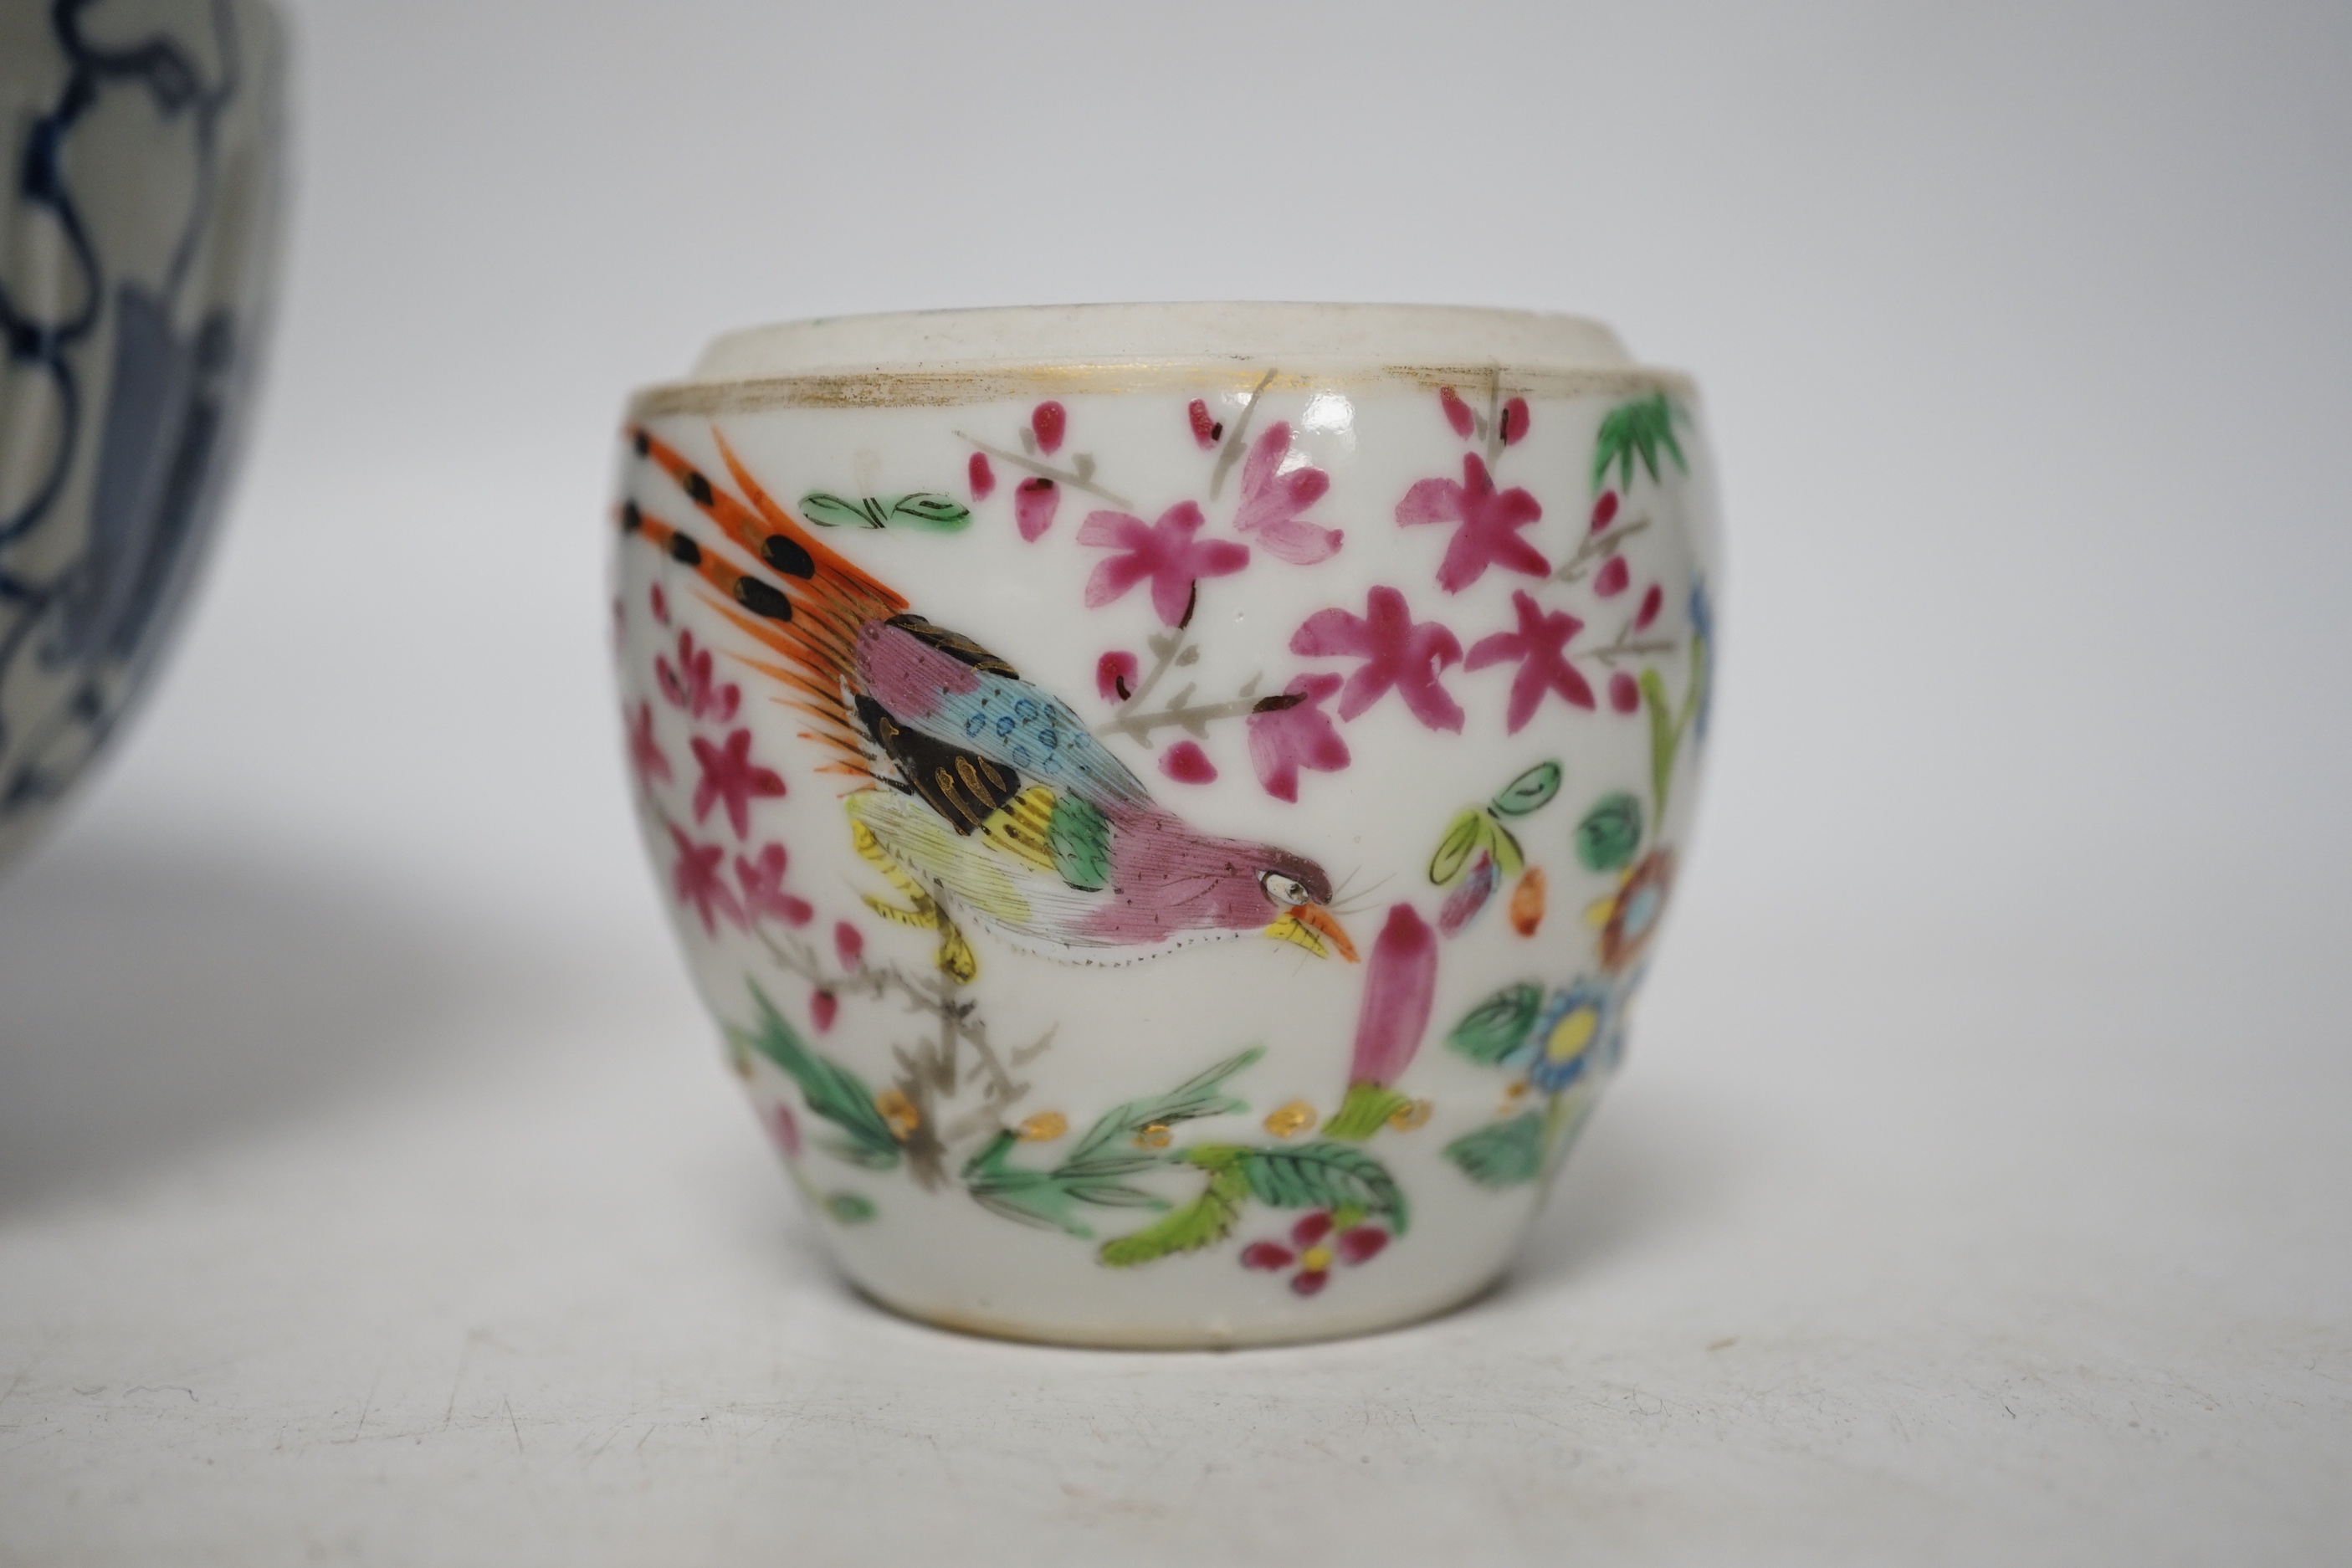 Chinese ceramics, 19th century and later, dish bowl 14cm diameter